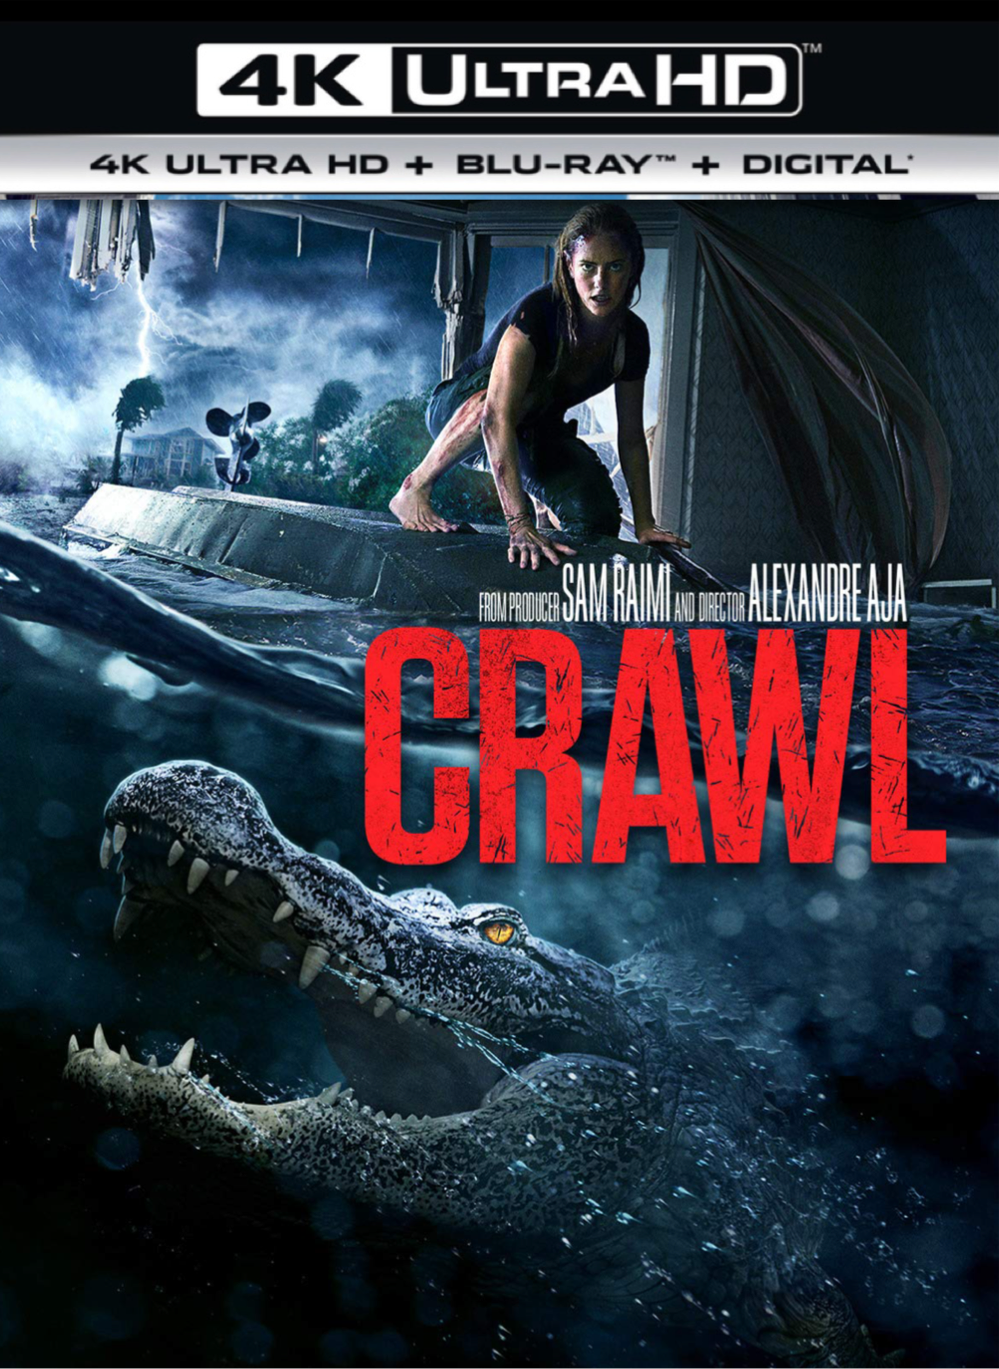 Crawl (2019) iTunes 4K redemption only